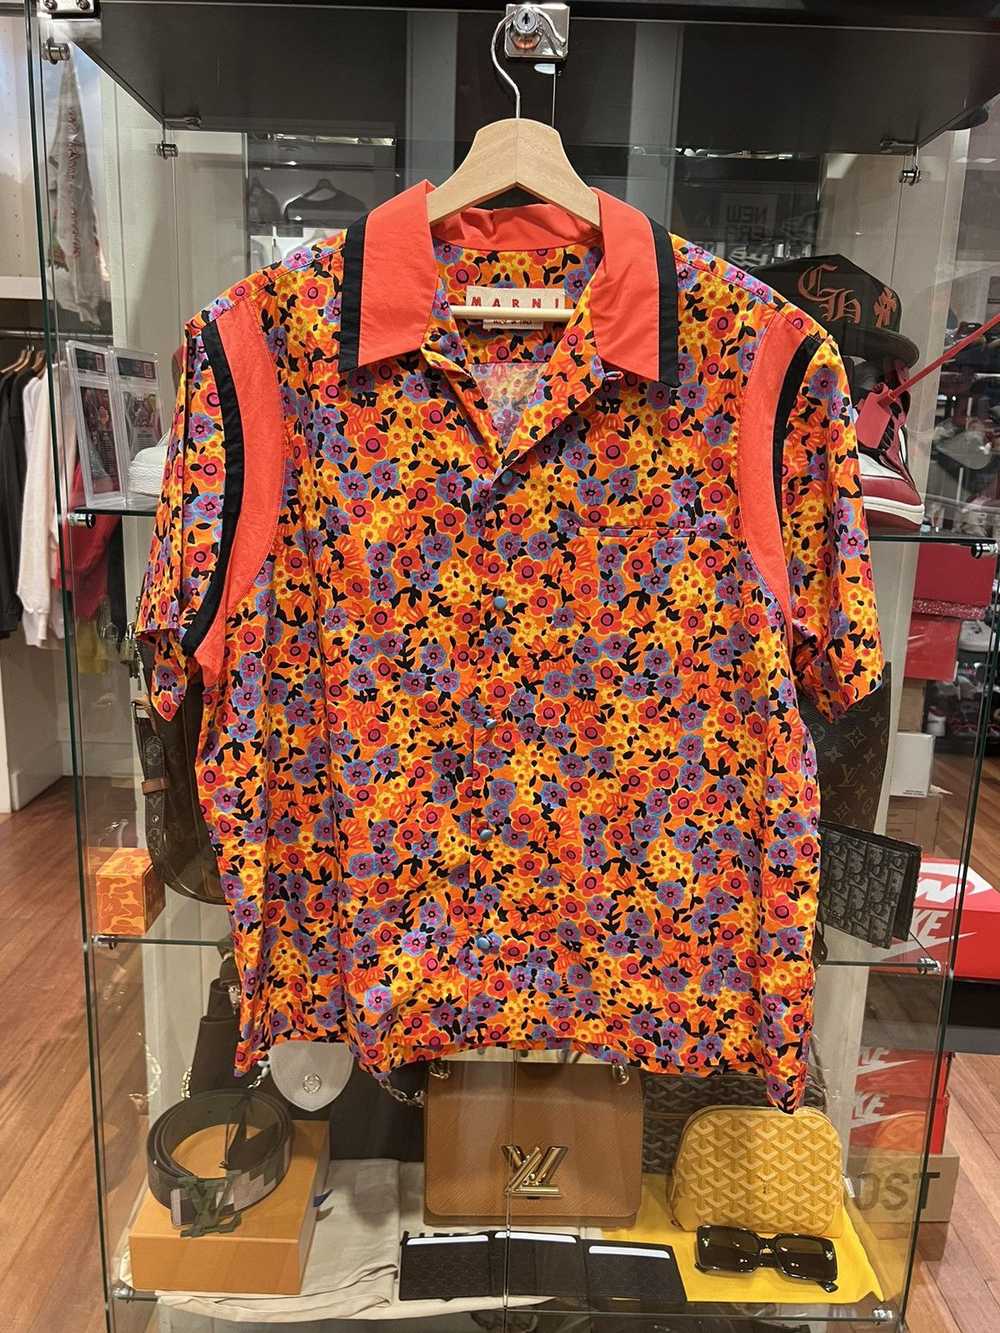 Marni Marni floral button up bowling shirt - image 1